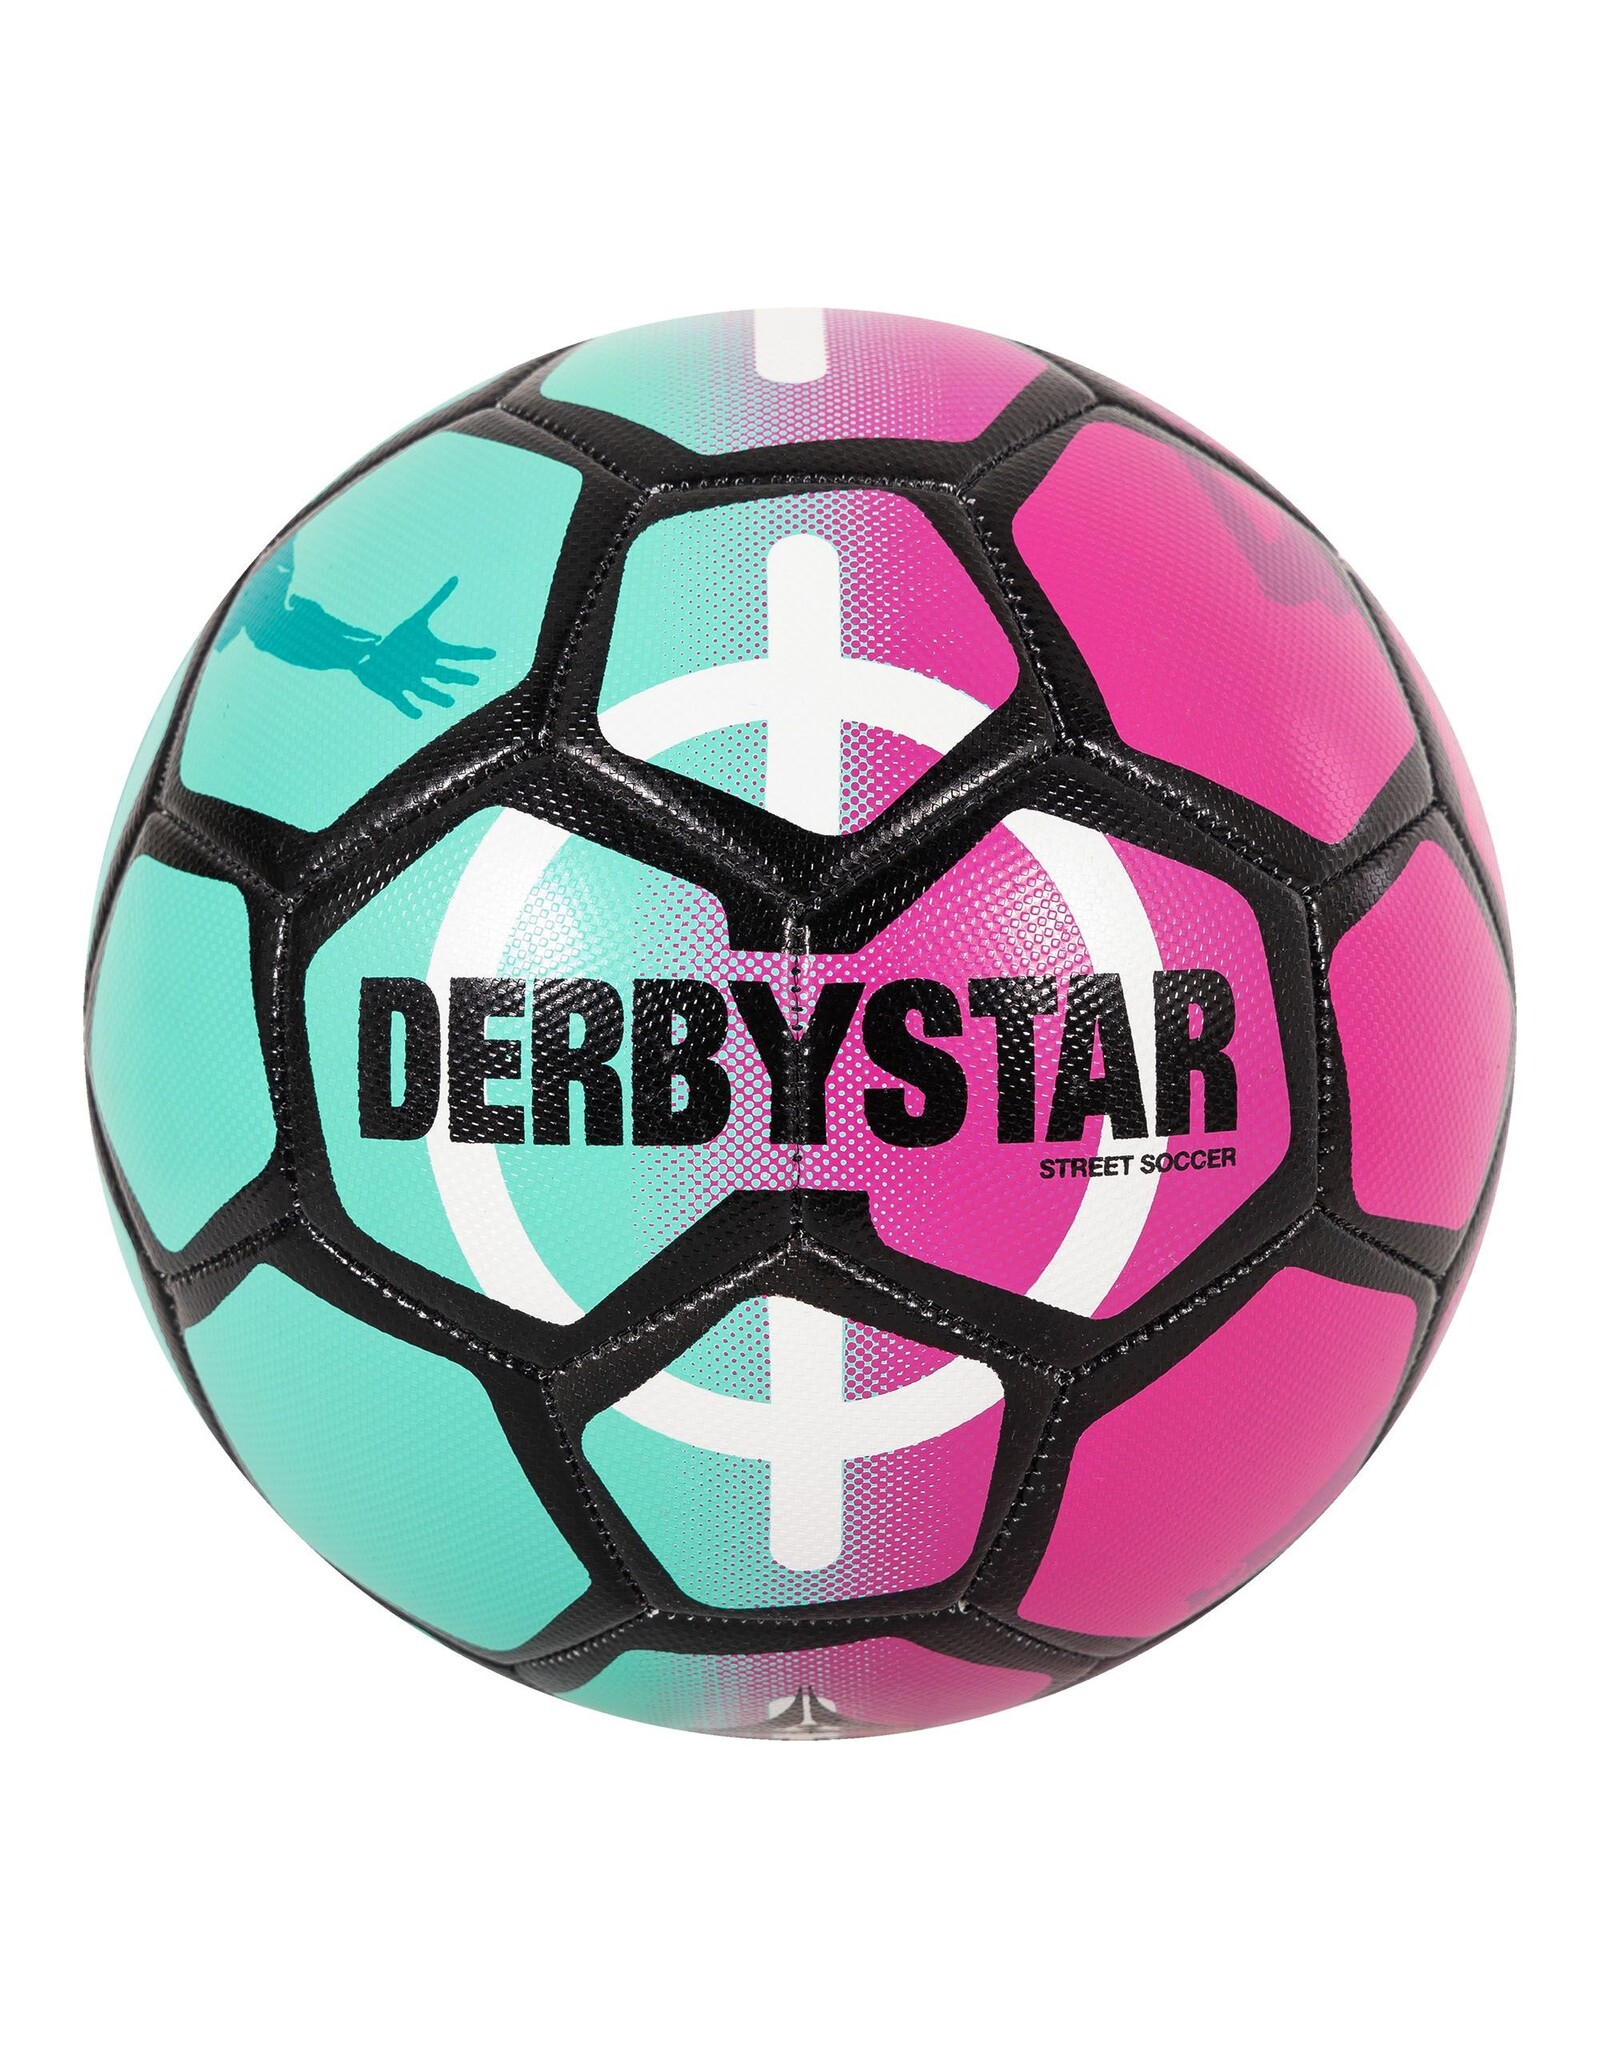 Derbystar Street Soccer Ball-Mint-Pink-Black